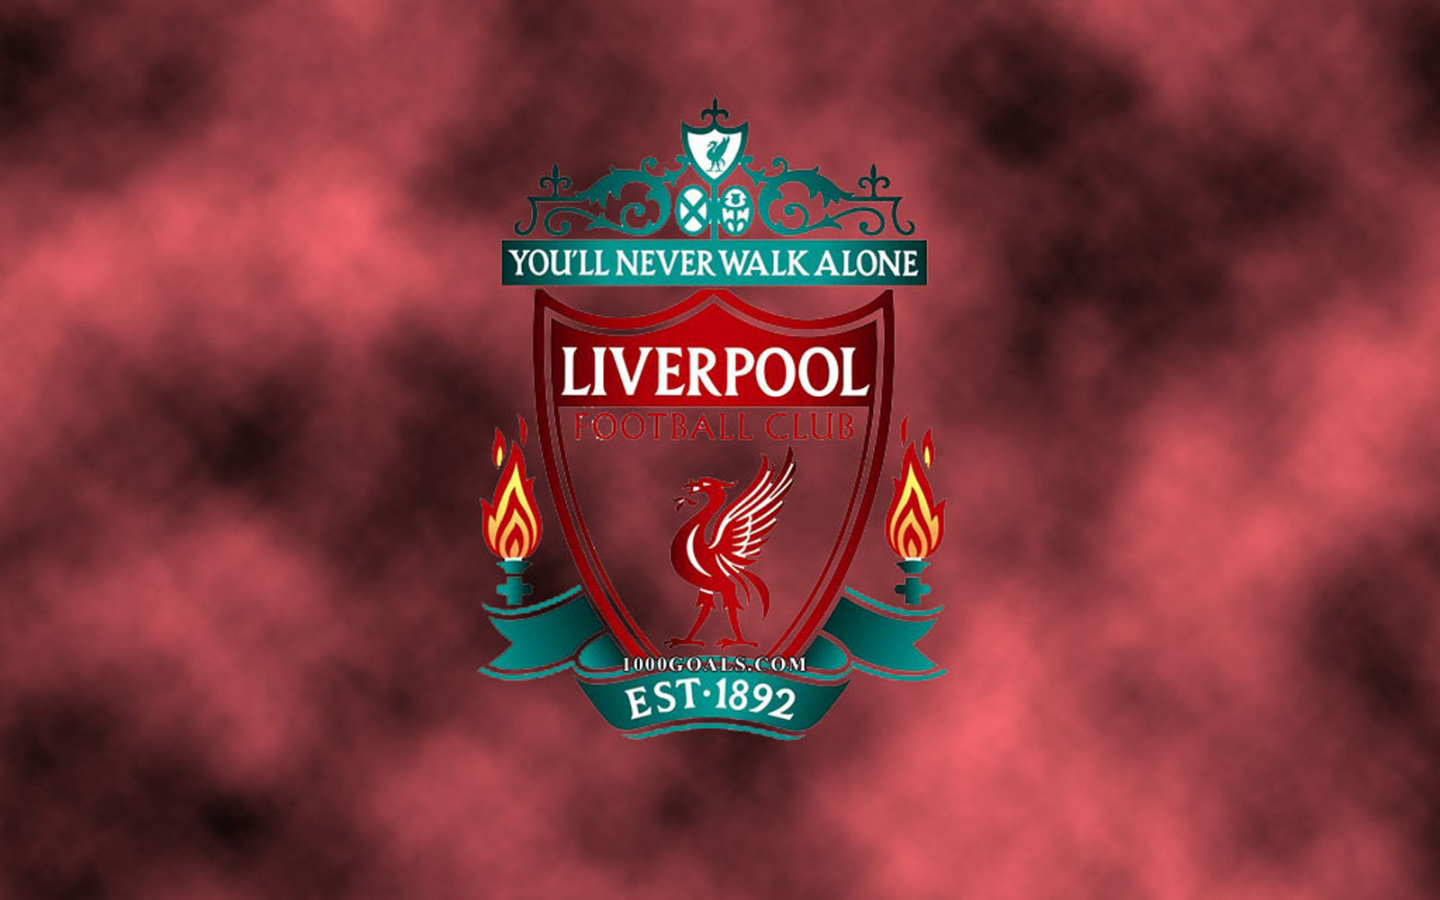  Liverpool Football club